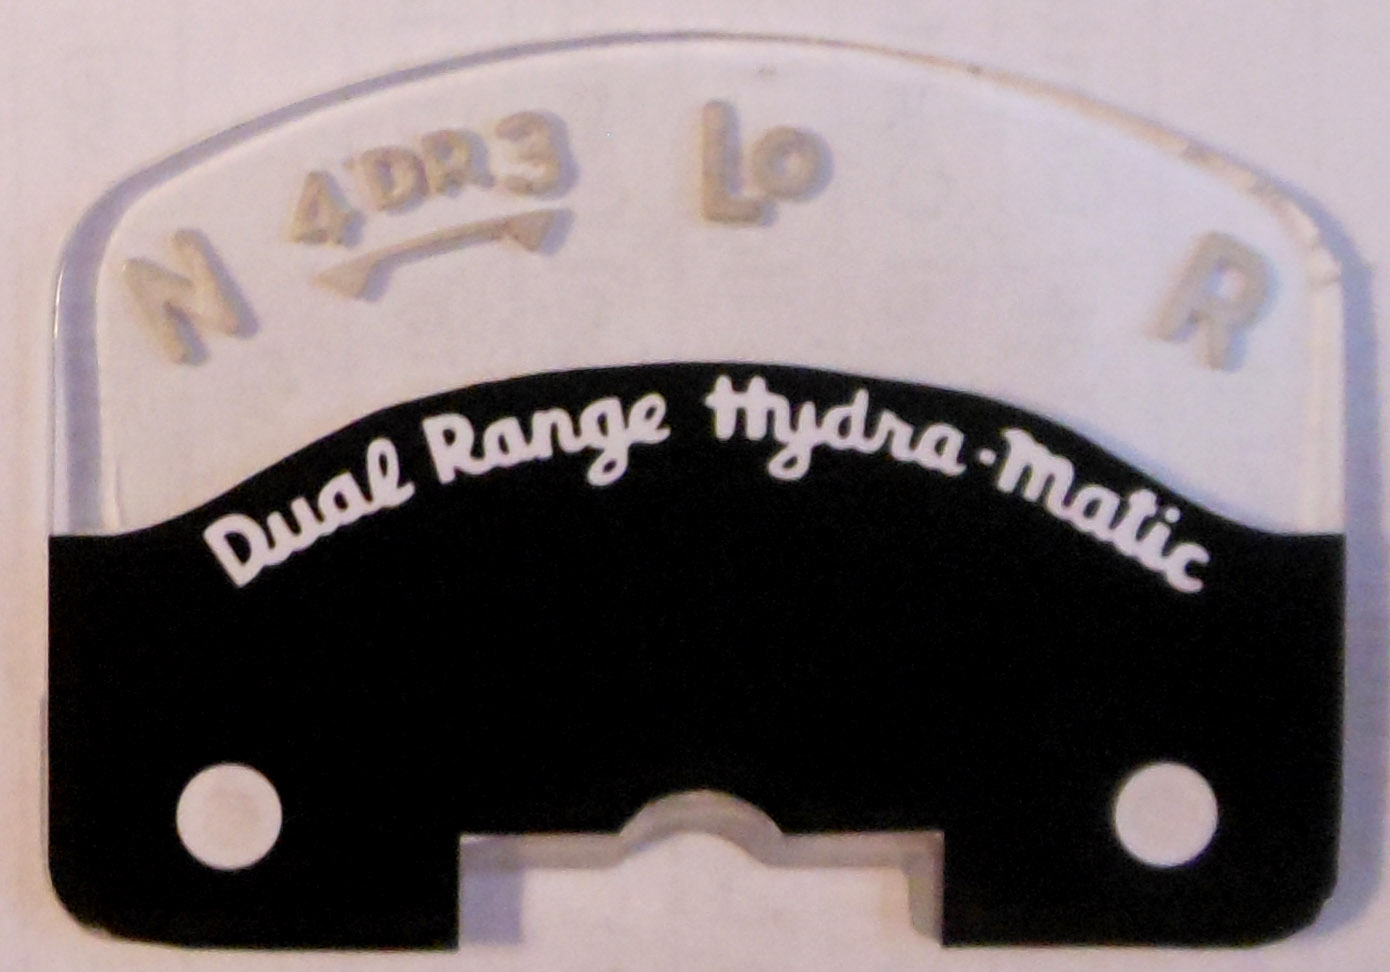 Dual Range Hydra-Matic shift indicator